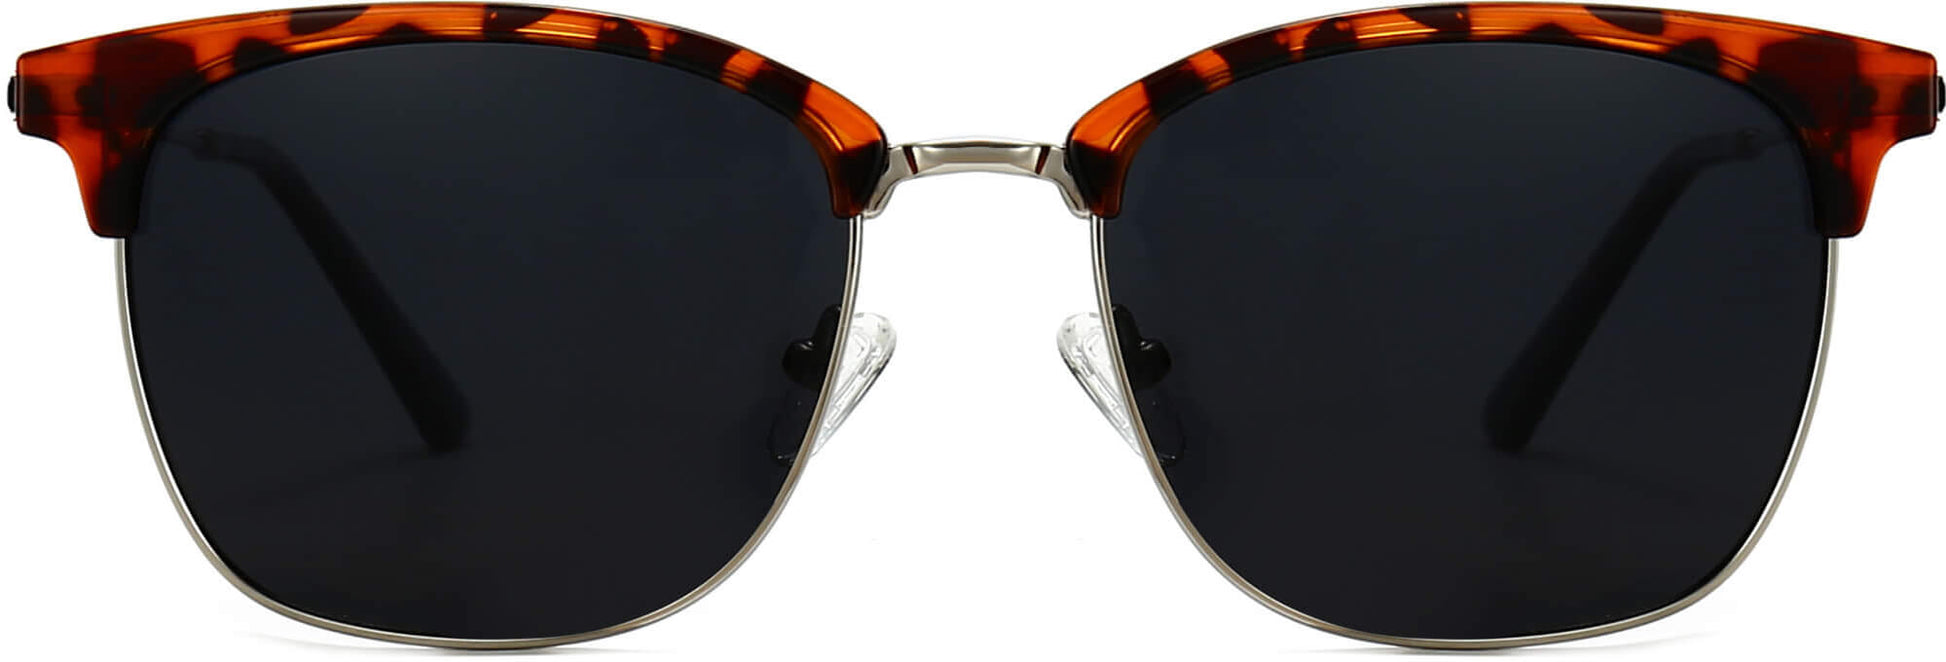 Vivian Tortoise Plastic Sunglasses from ANRRI, front view